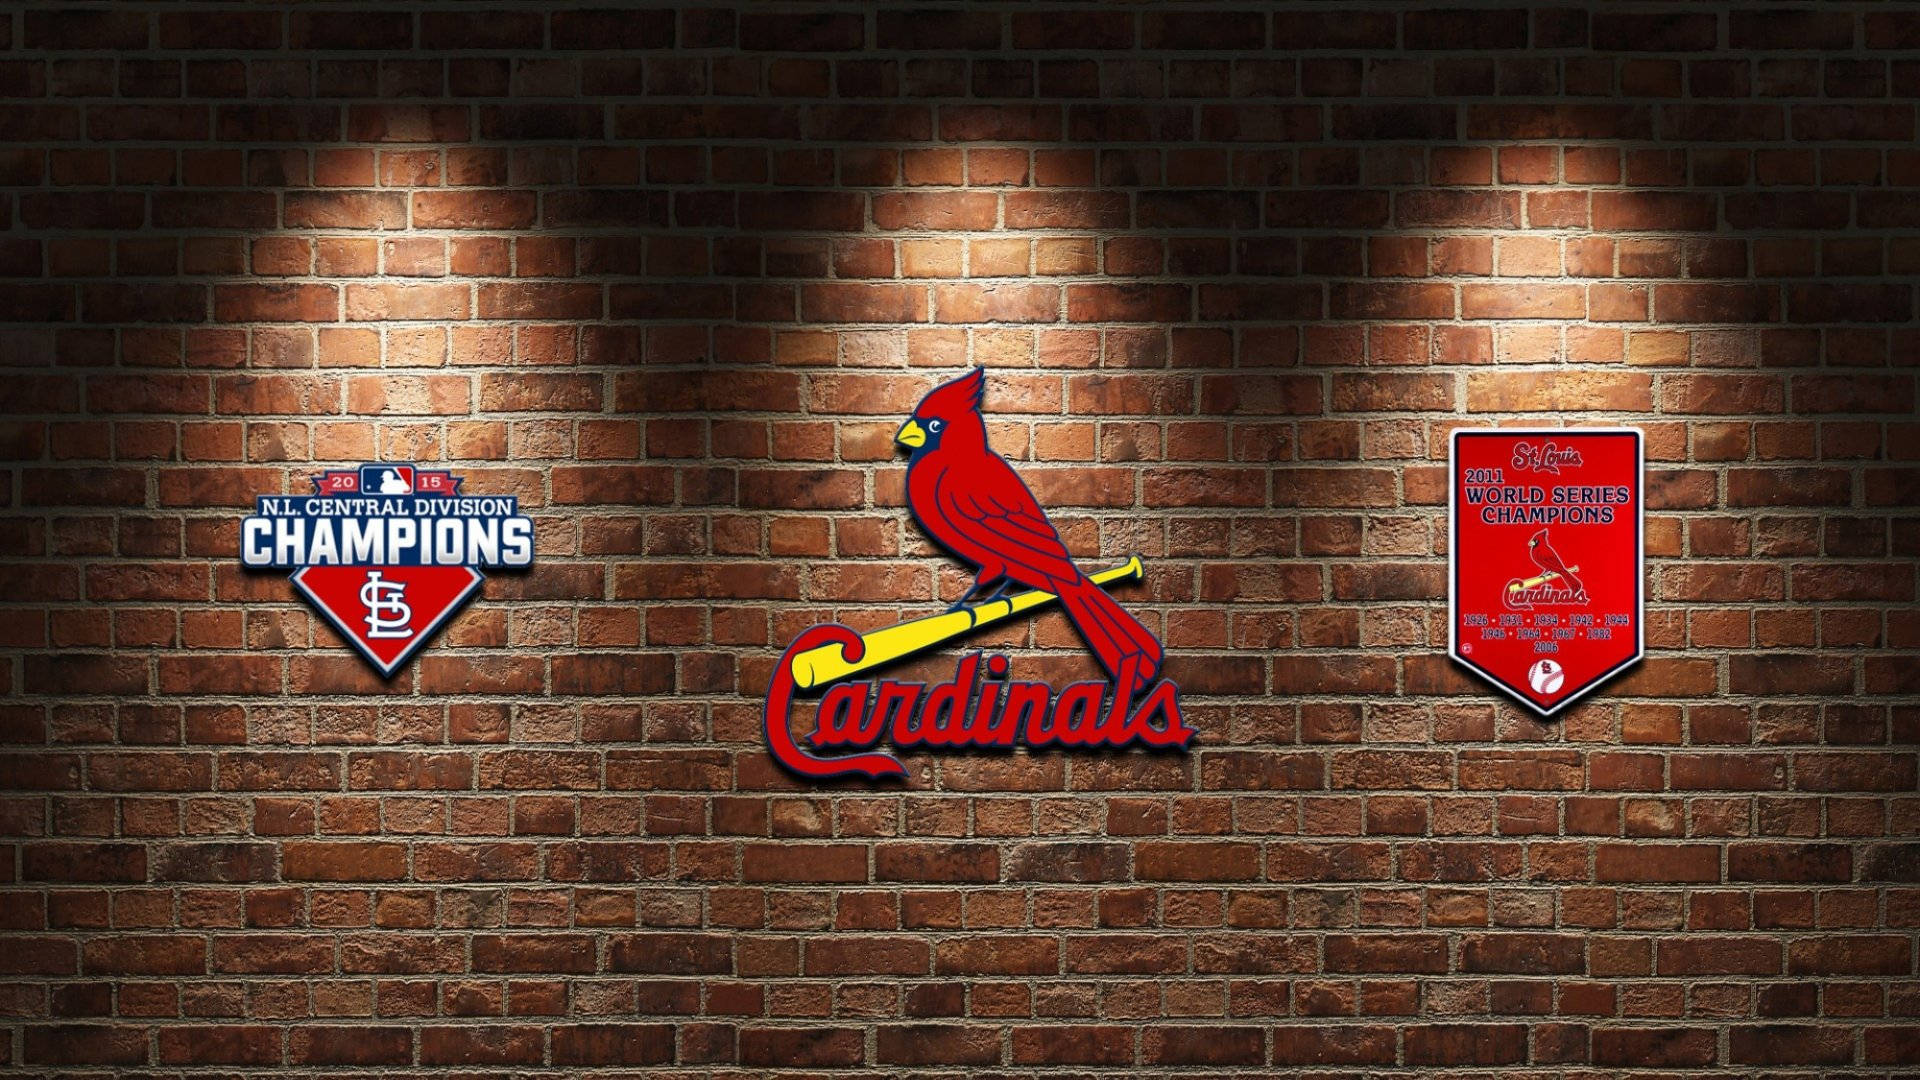 St Louis Cardinals Symbols And Awards Wallpaper